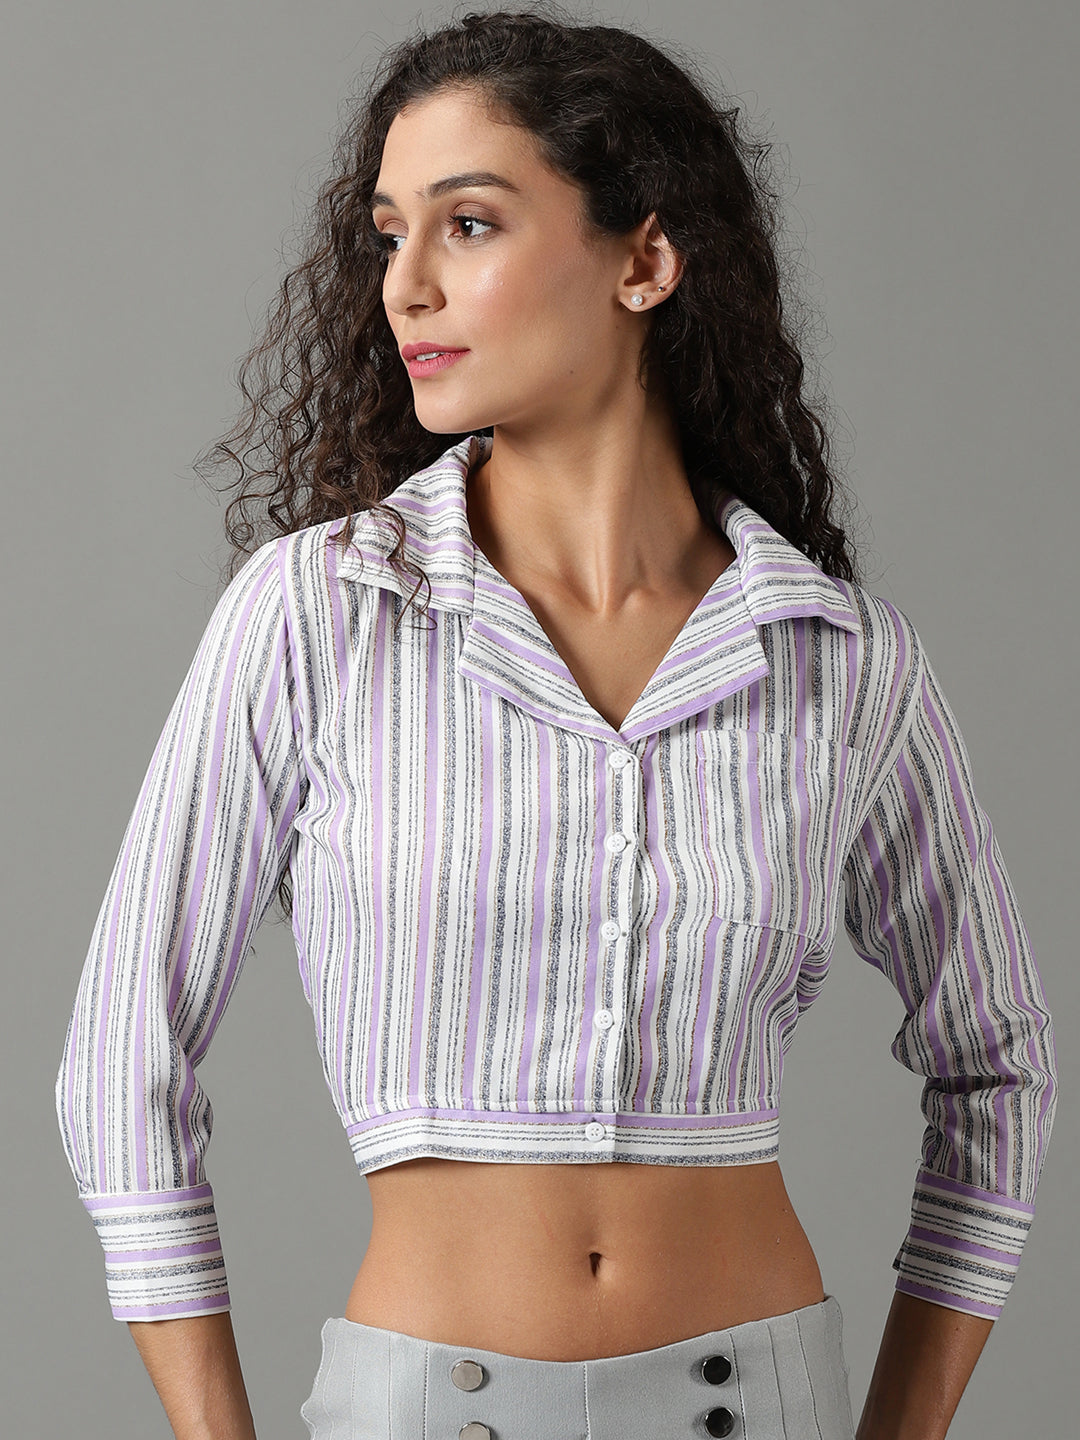 Women's White Striped Shirt Style Crop Top